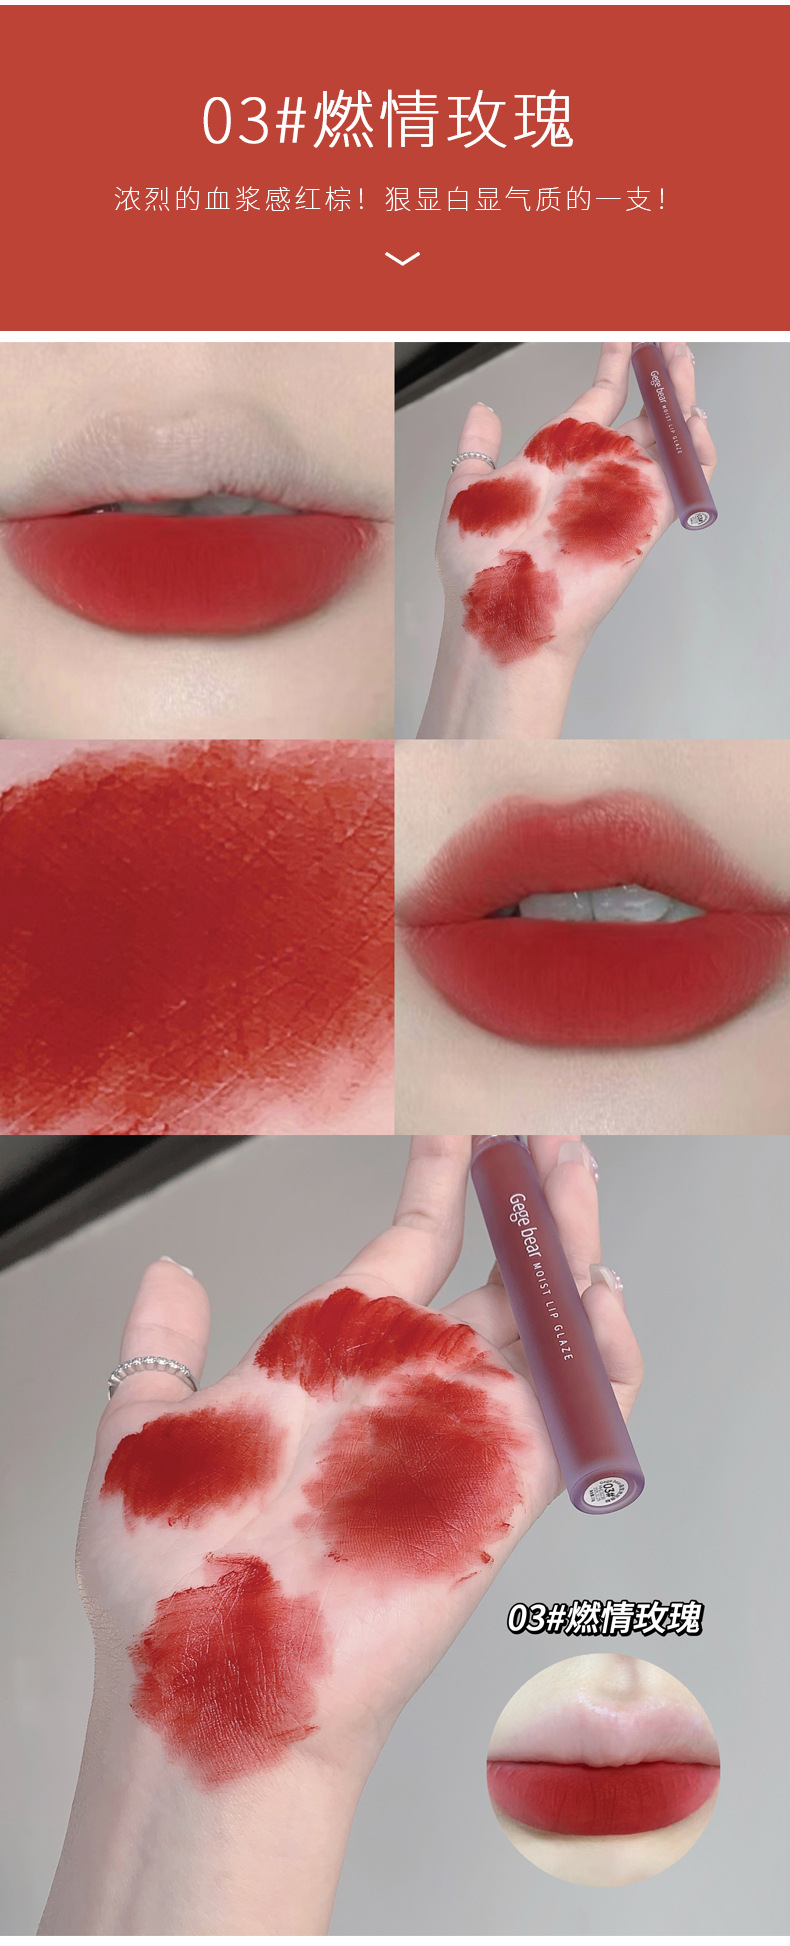 Gegebear lip gloss manufacture